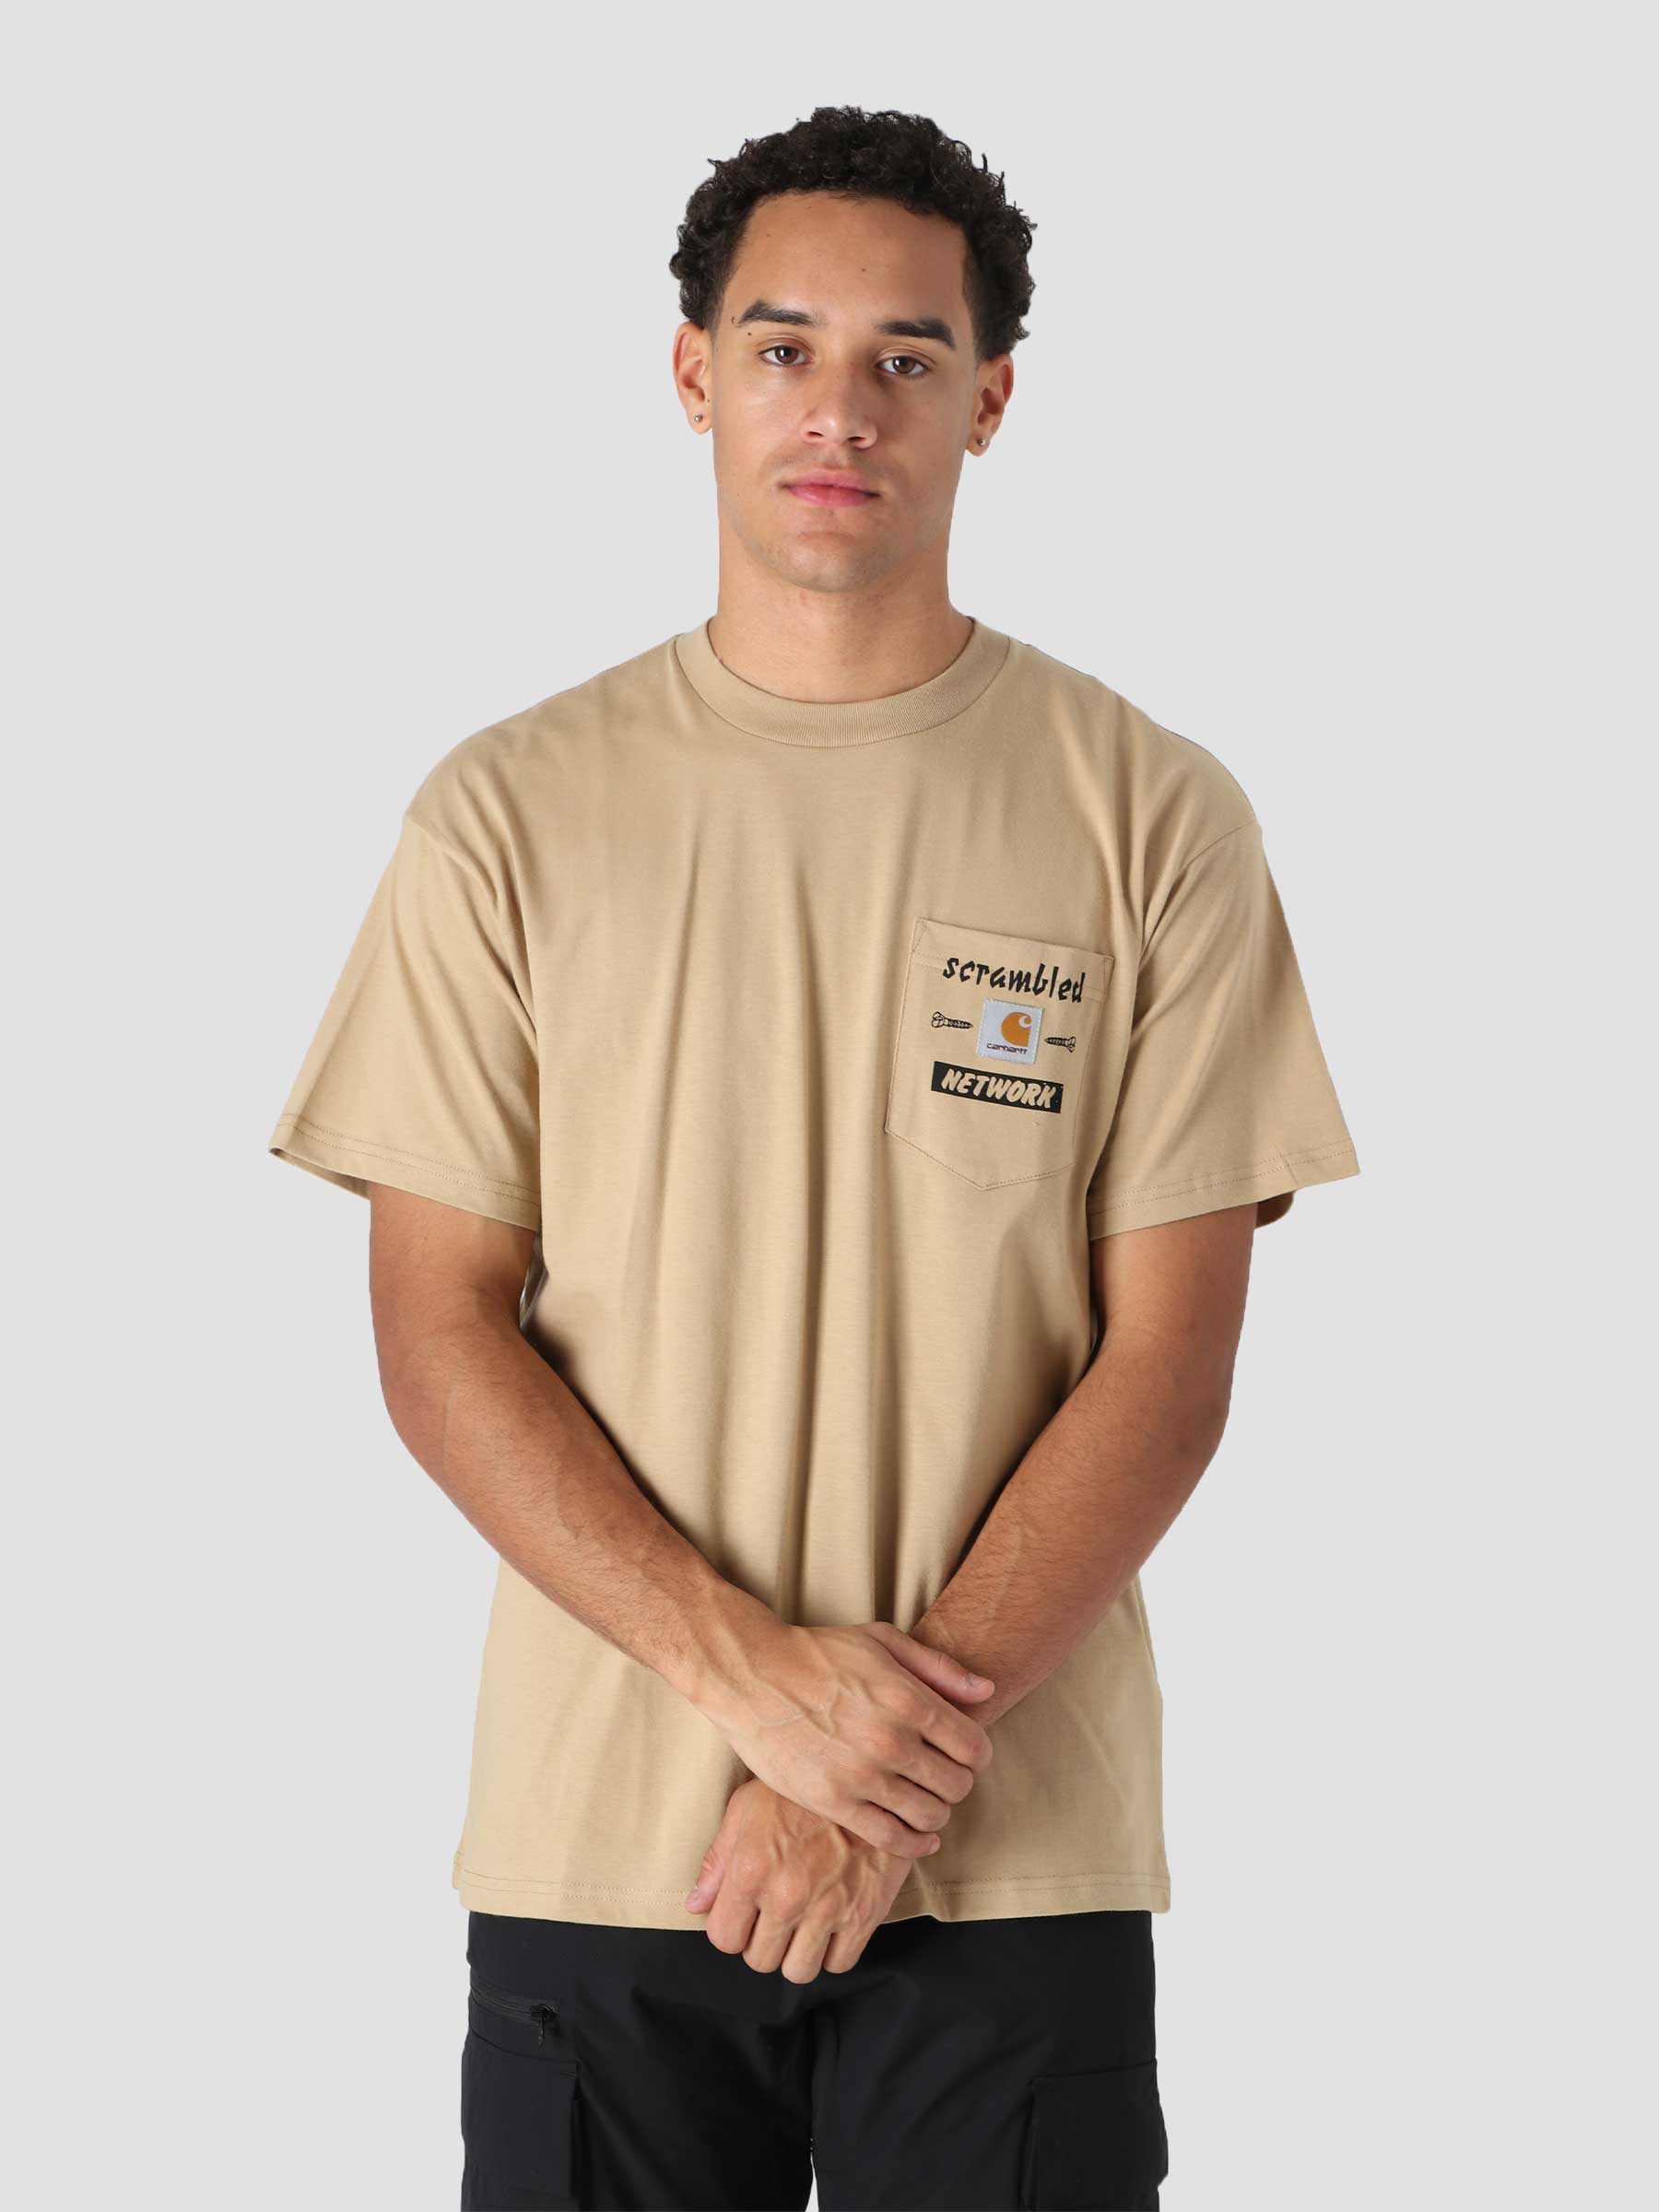 S/S Scramble Pocket T-Shirt Dusty H Brown Black I029983-0IAXX